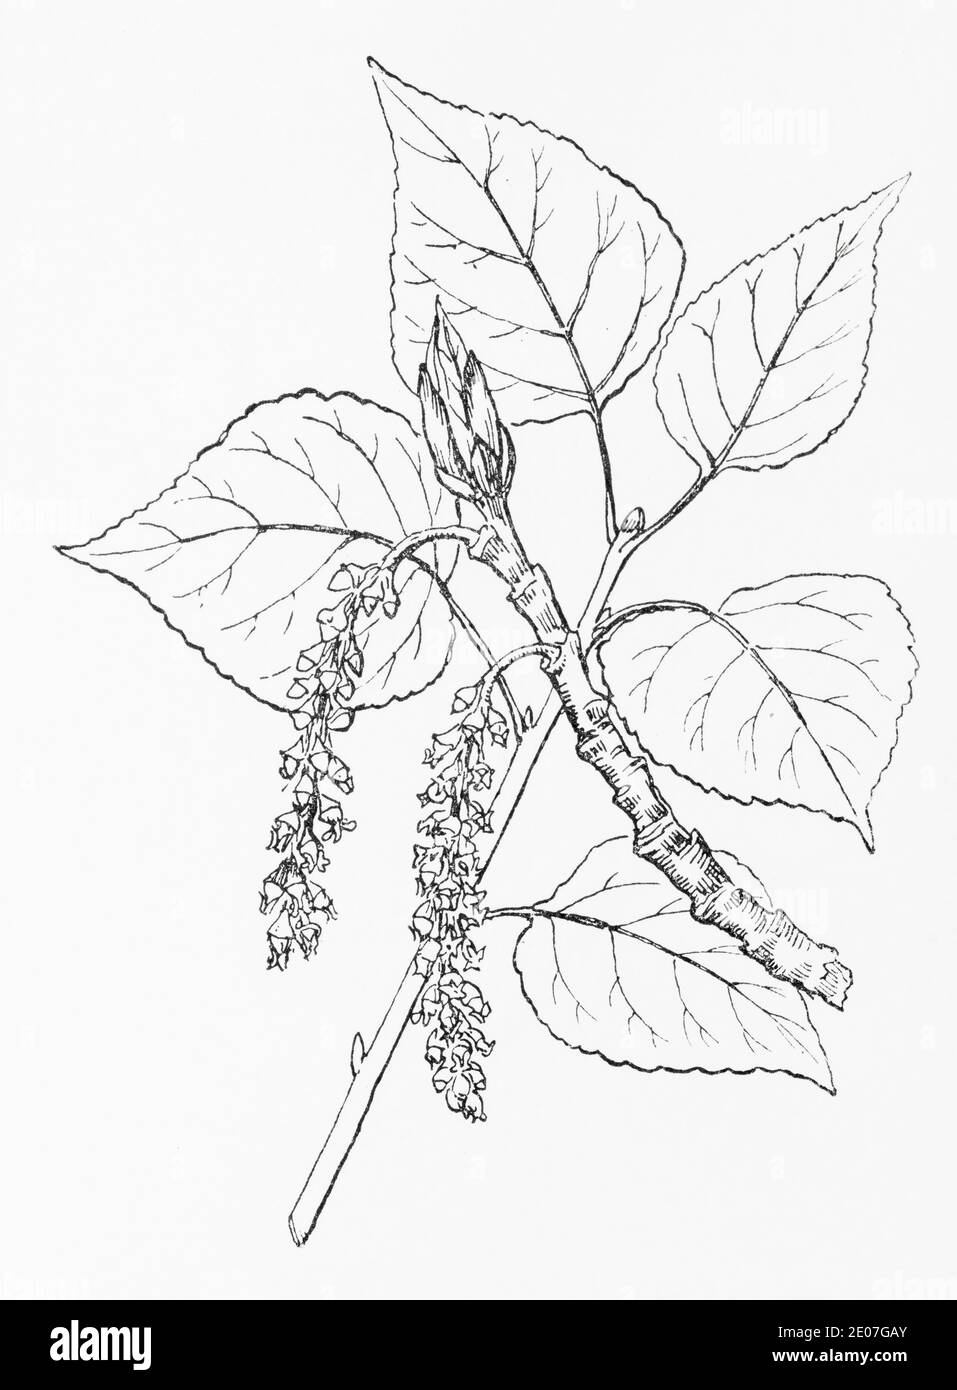 Old botanical illustration engraving of Black Poplar / Populus nigra. Traditional medicinal herbal plant. See Notes Stock Photo